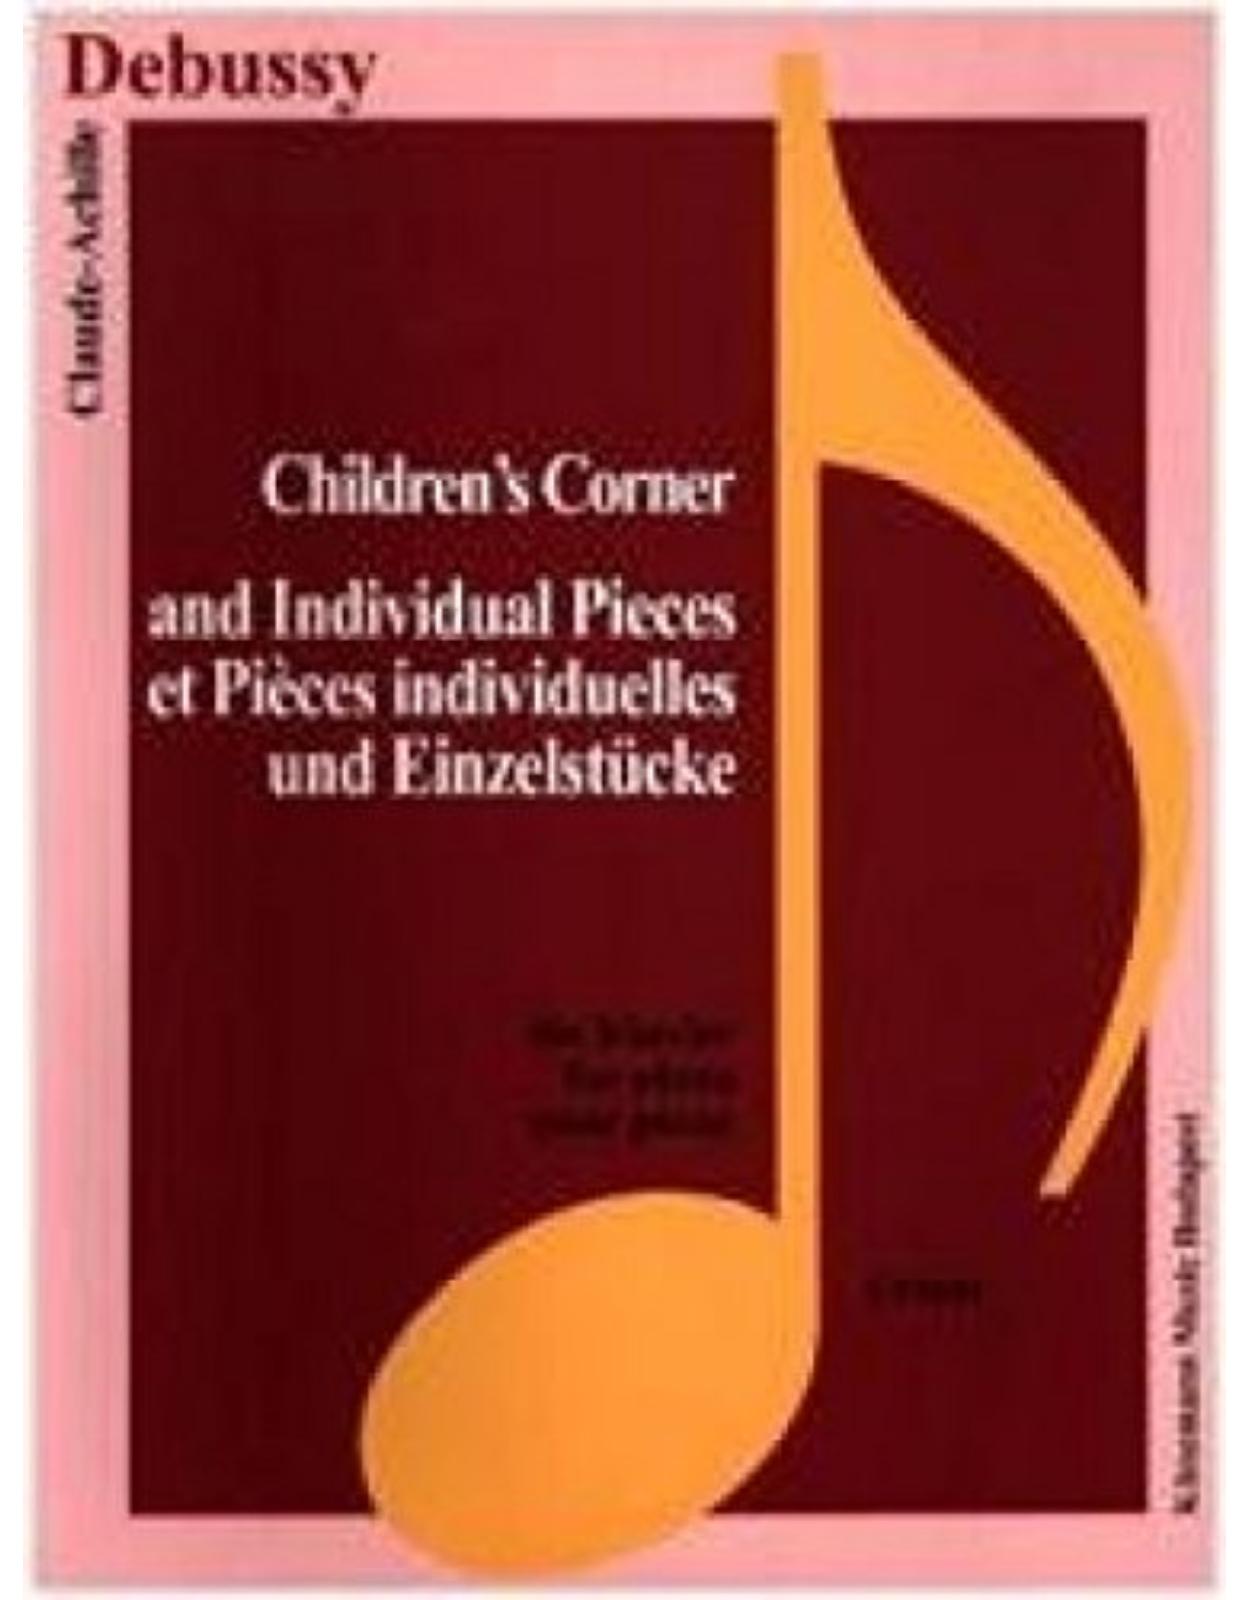 Debussy, Children's Corner